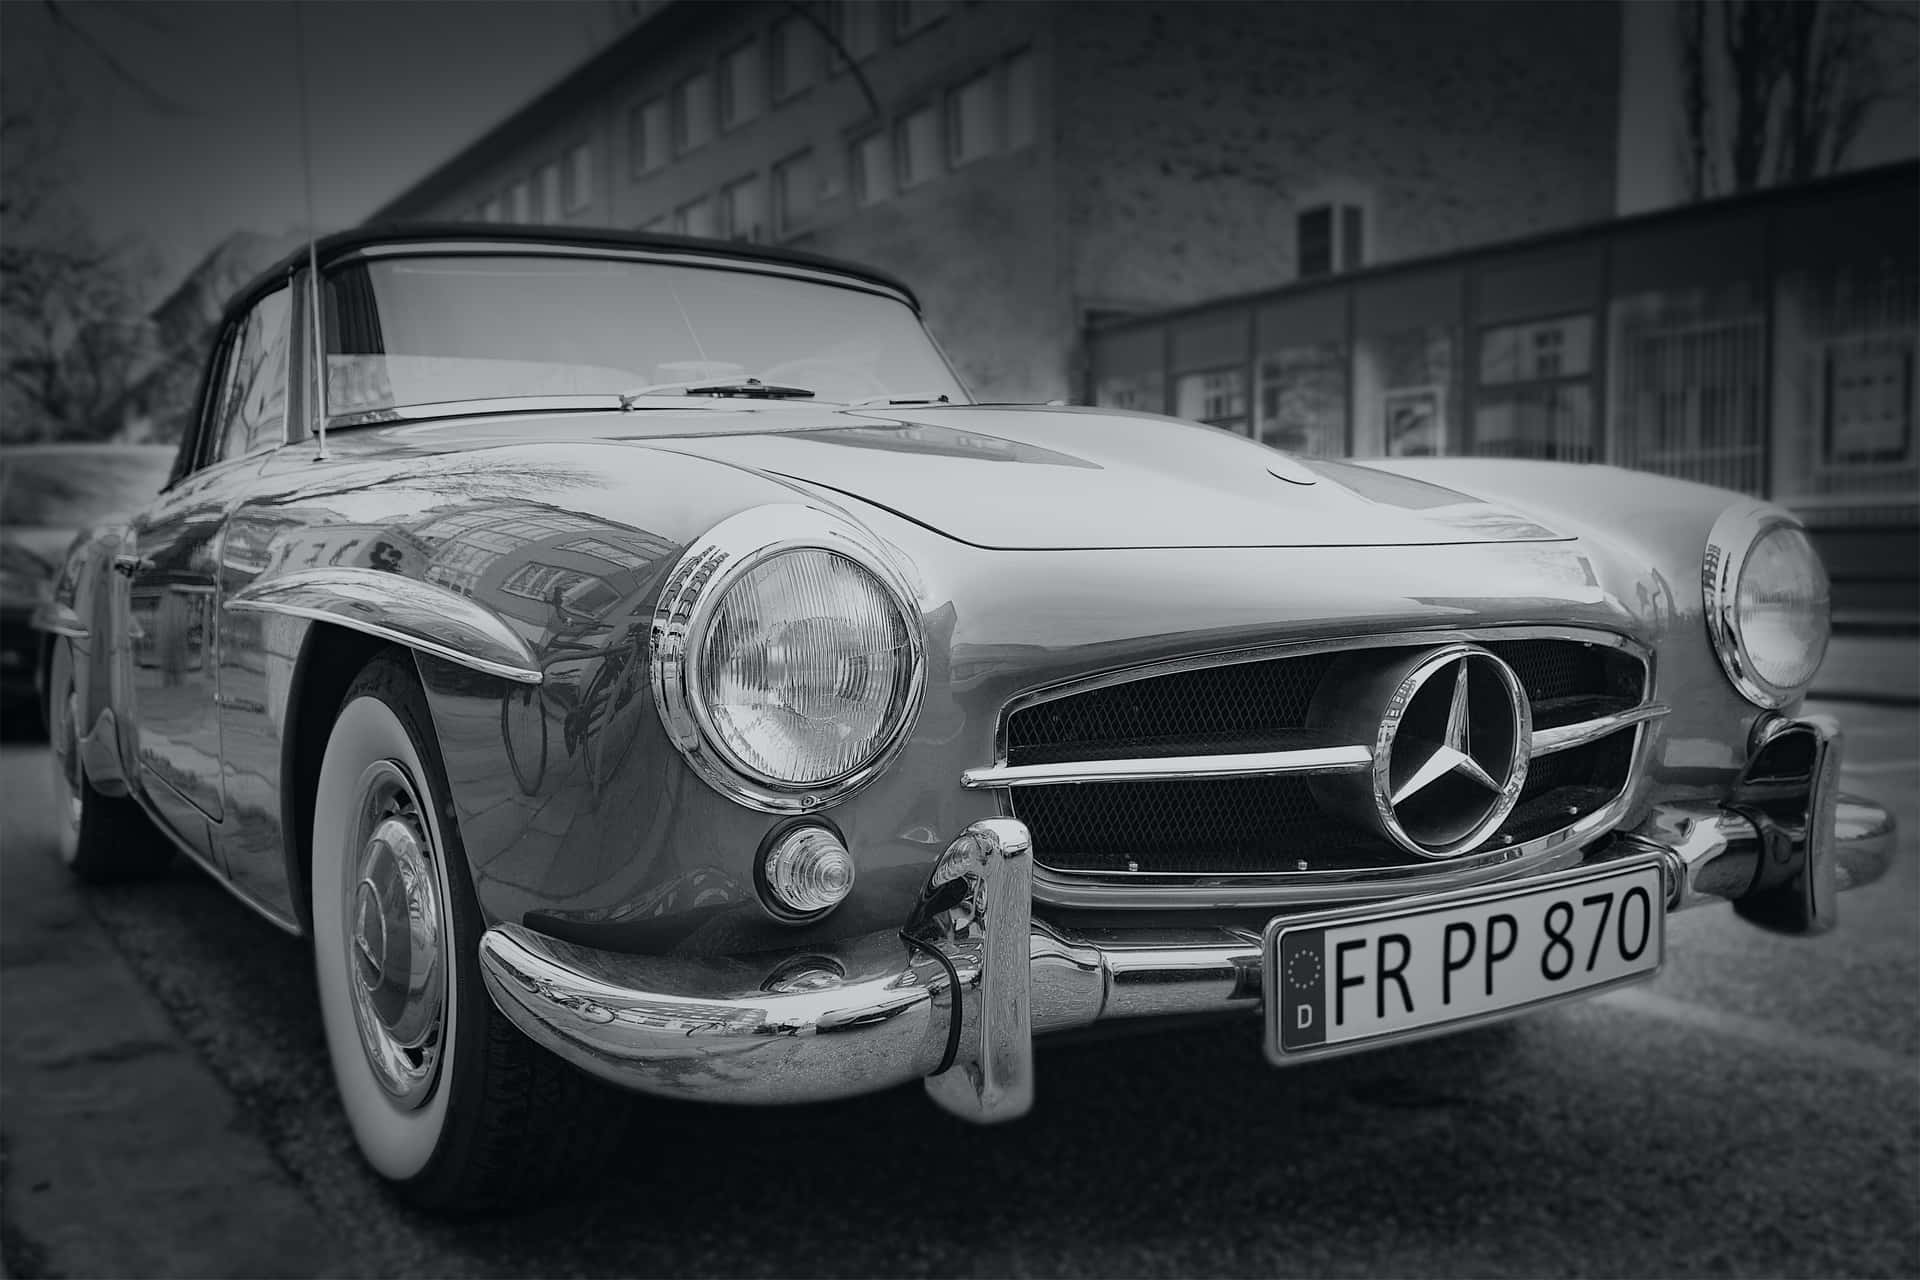 "A classic Mercedes, a timeless piece of automotive beauty." Wallpaper